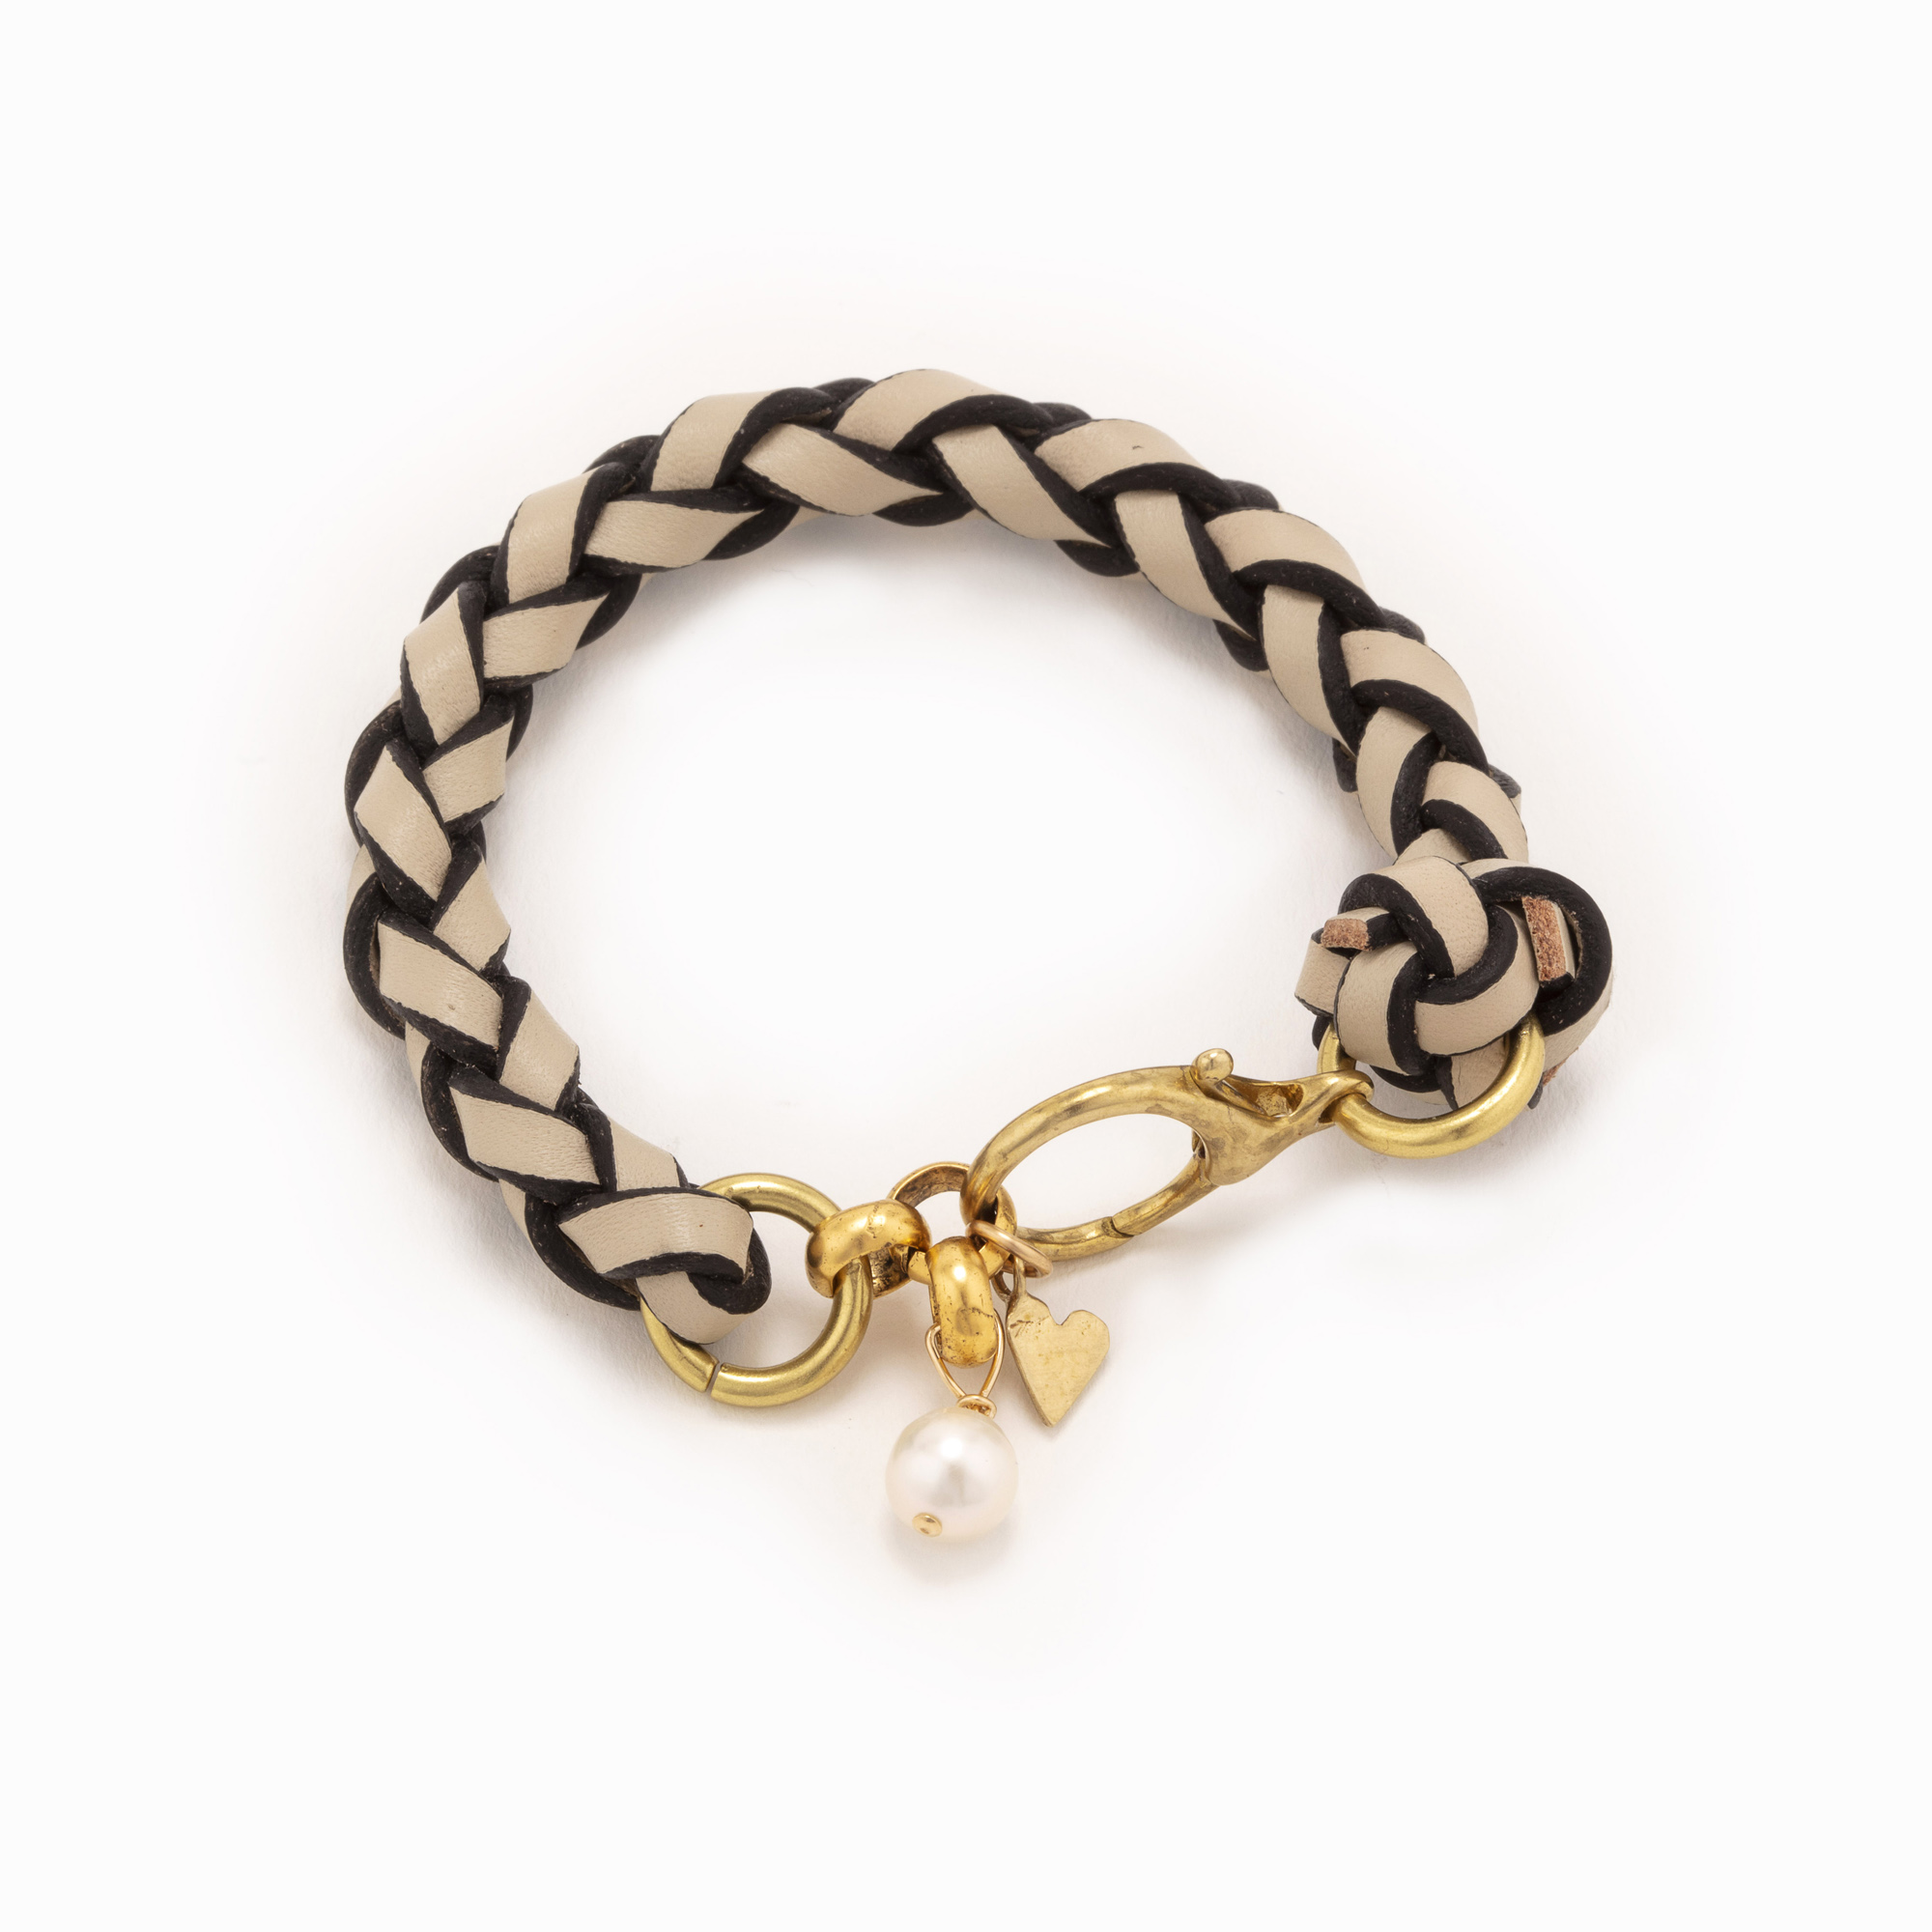 Featured image for “Biblio Italian Leather Bracelet”